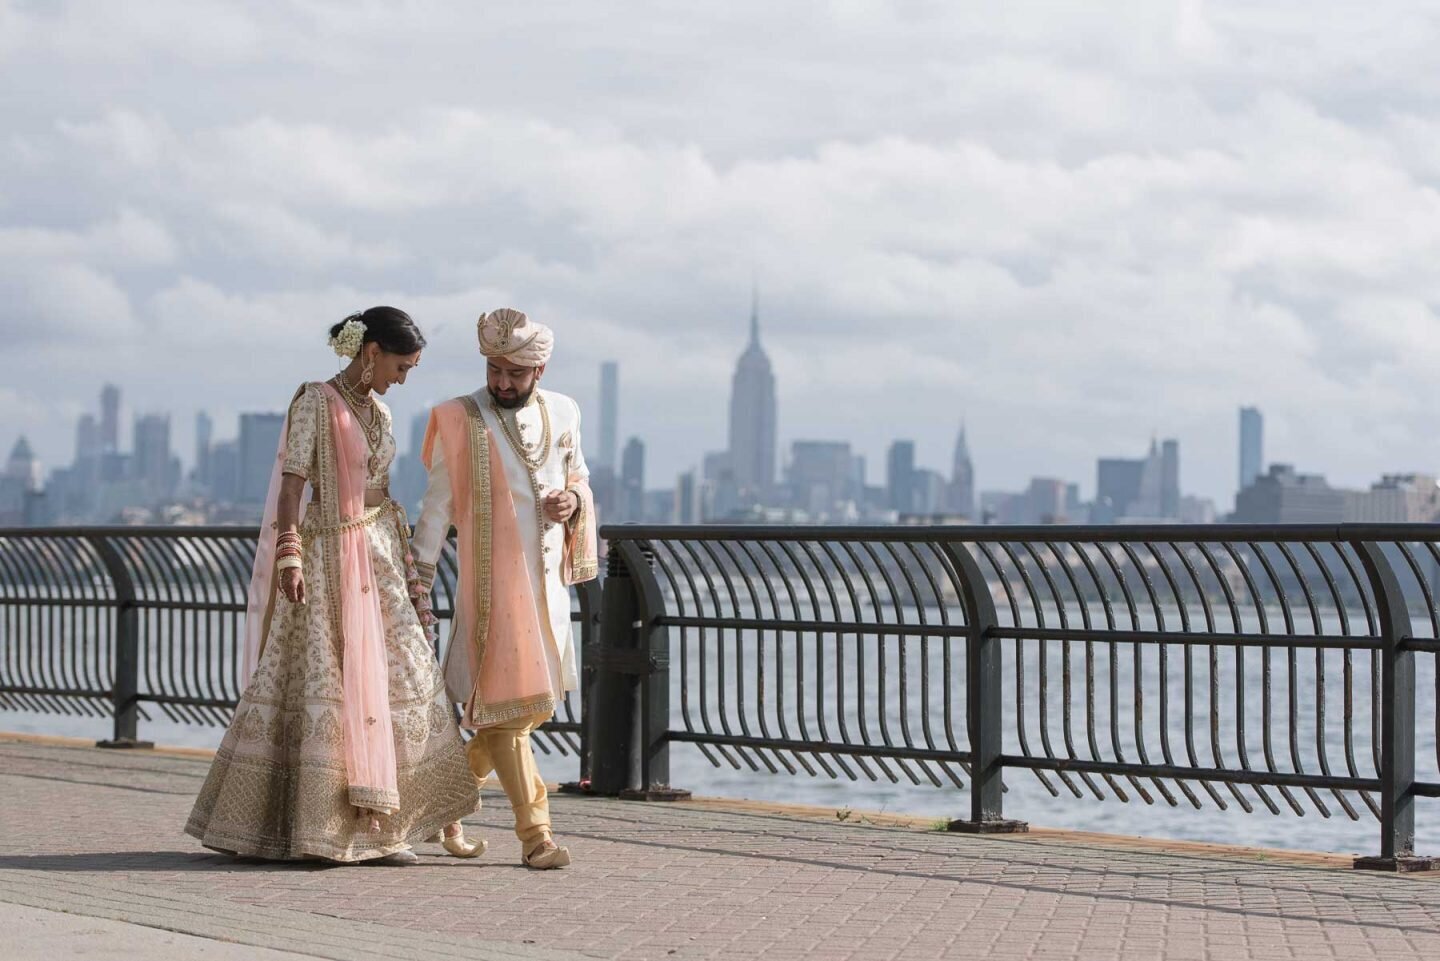 hyatt-regency-jersey-city-indian-wedding-09-1440x961